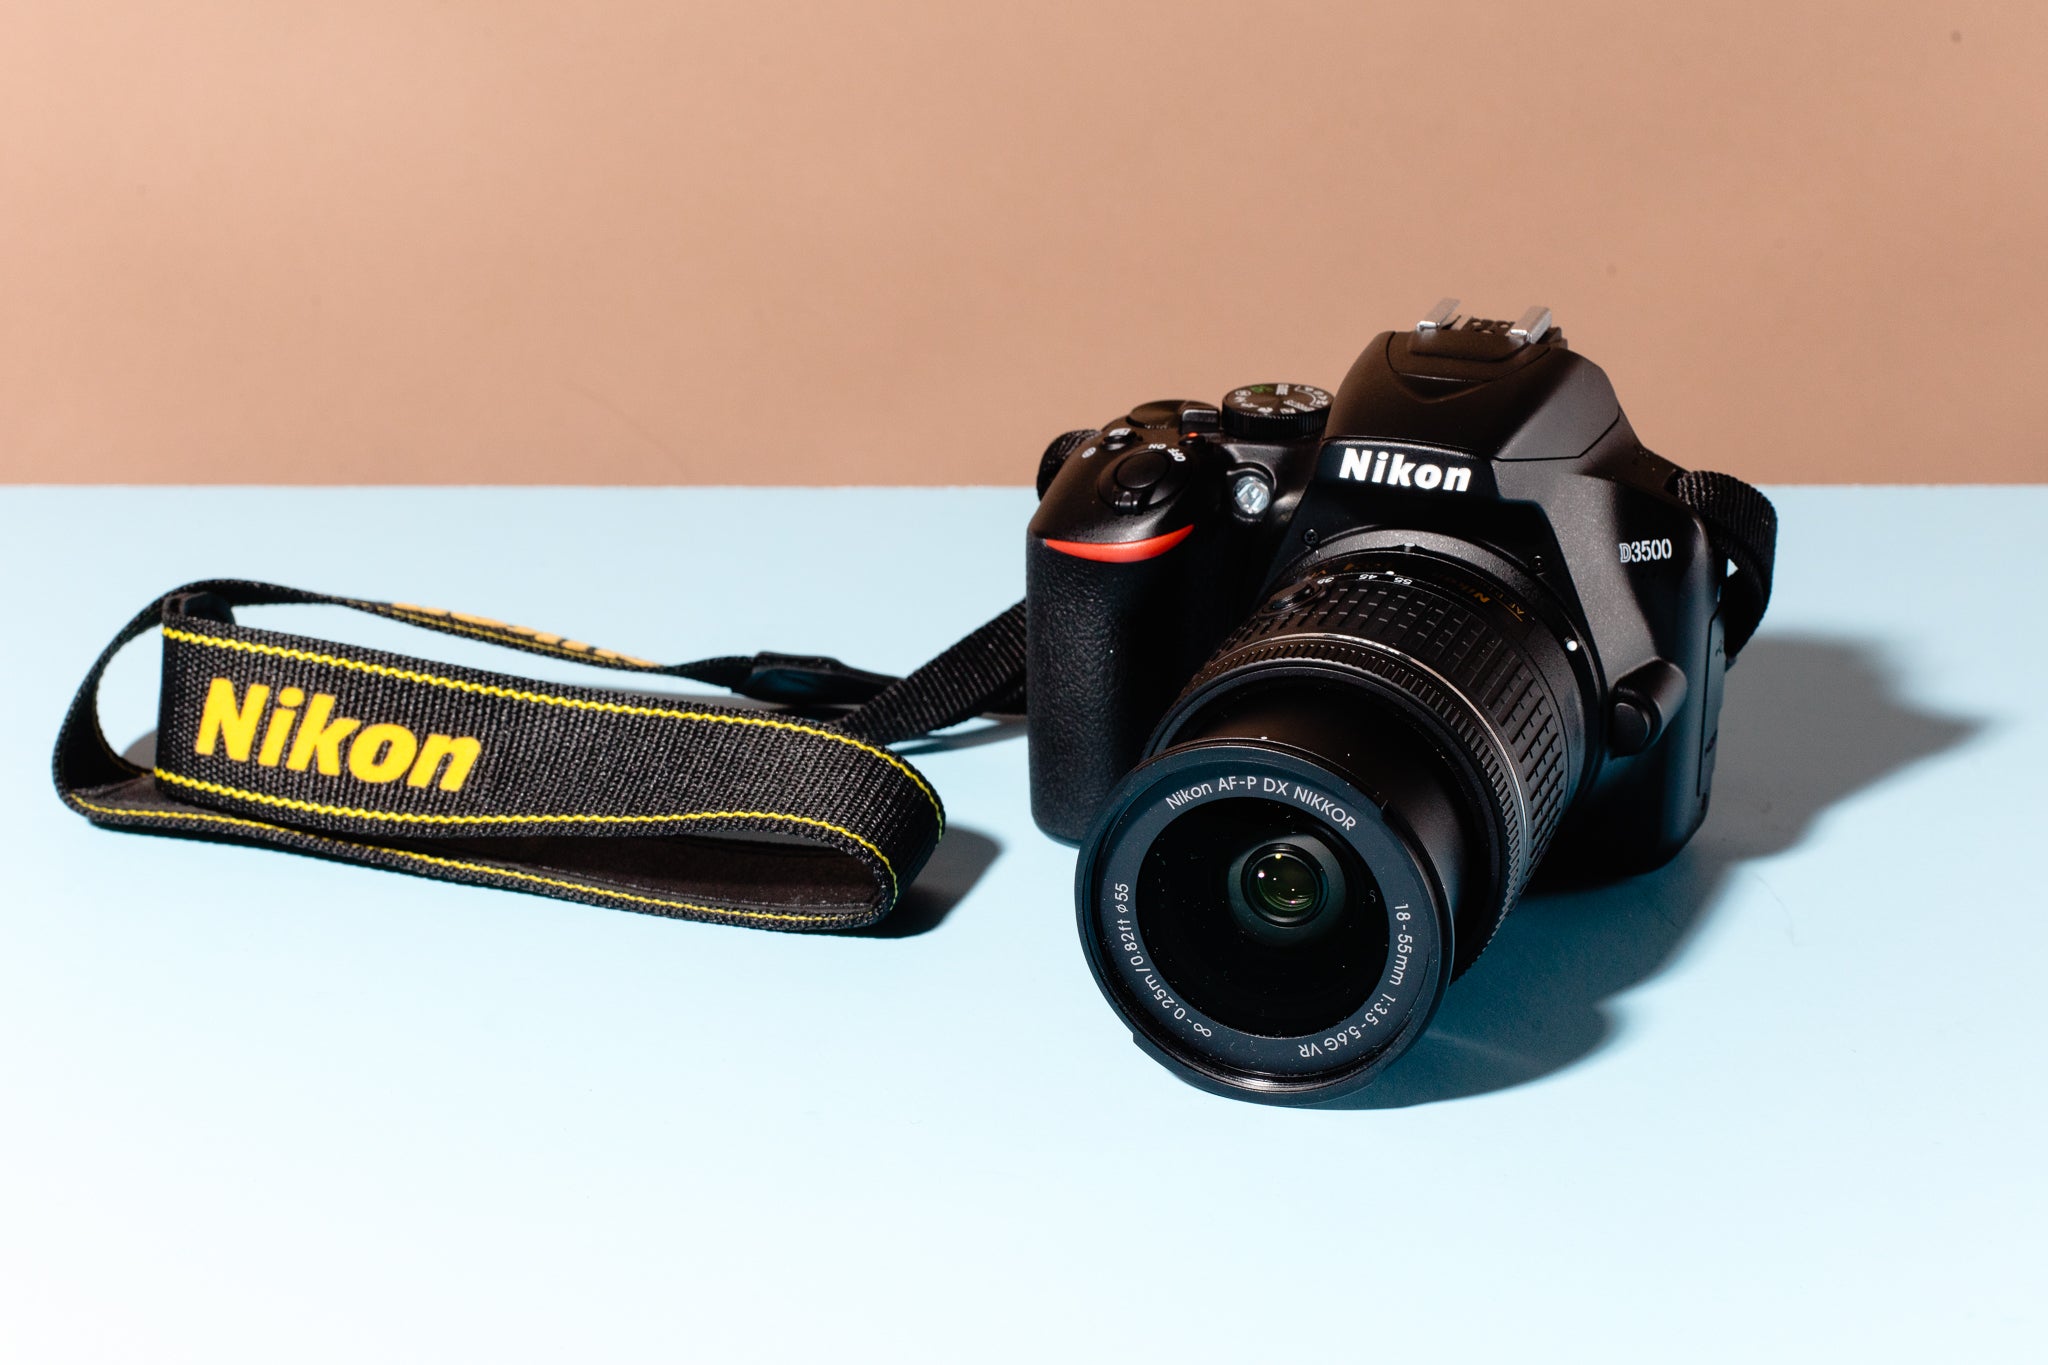 How To Use My Nikon DSLR Camera